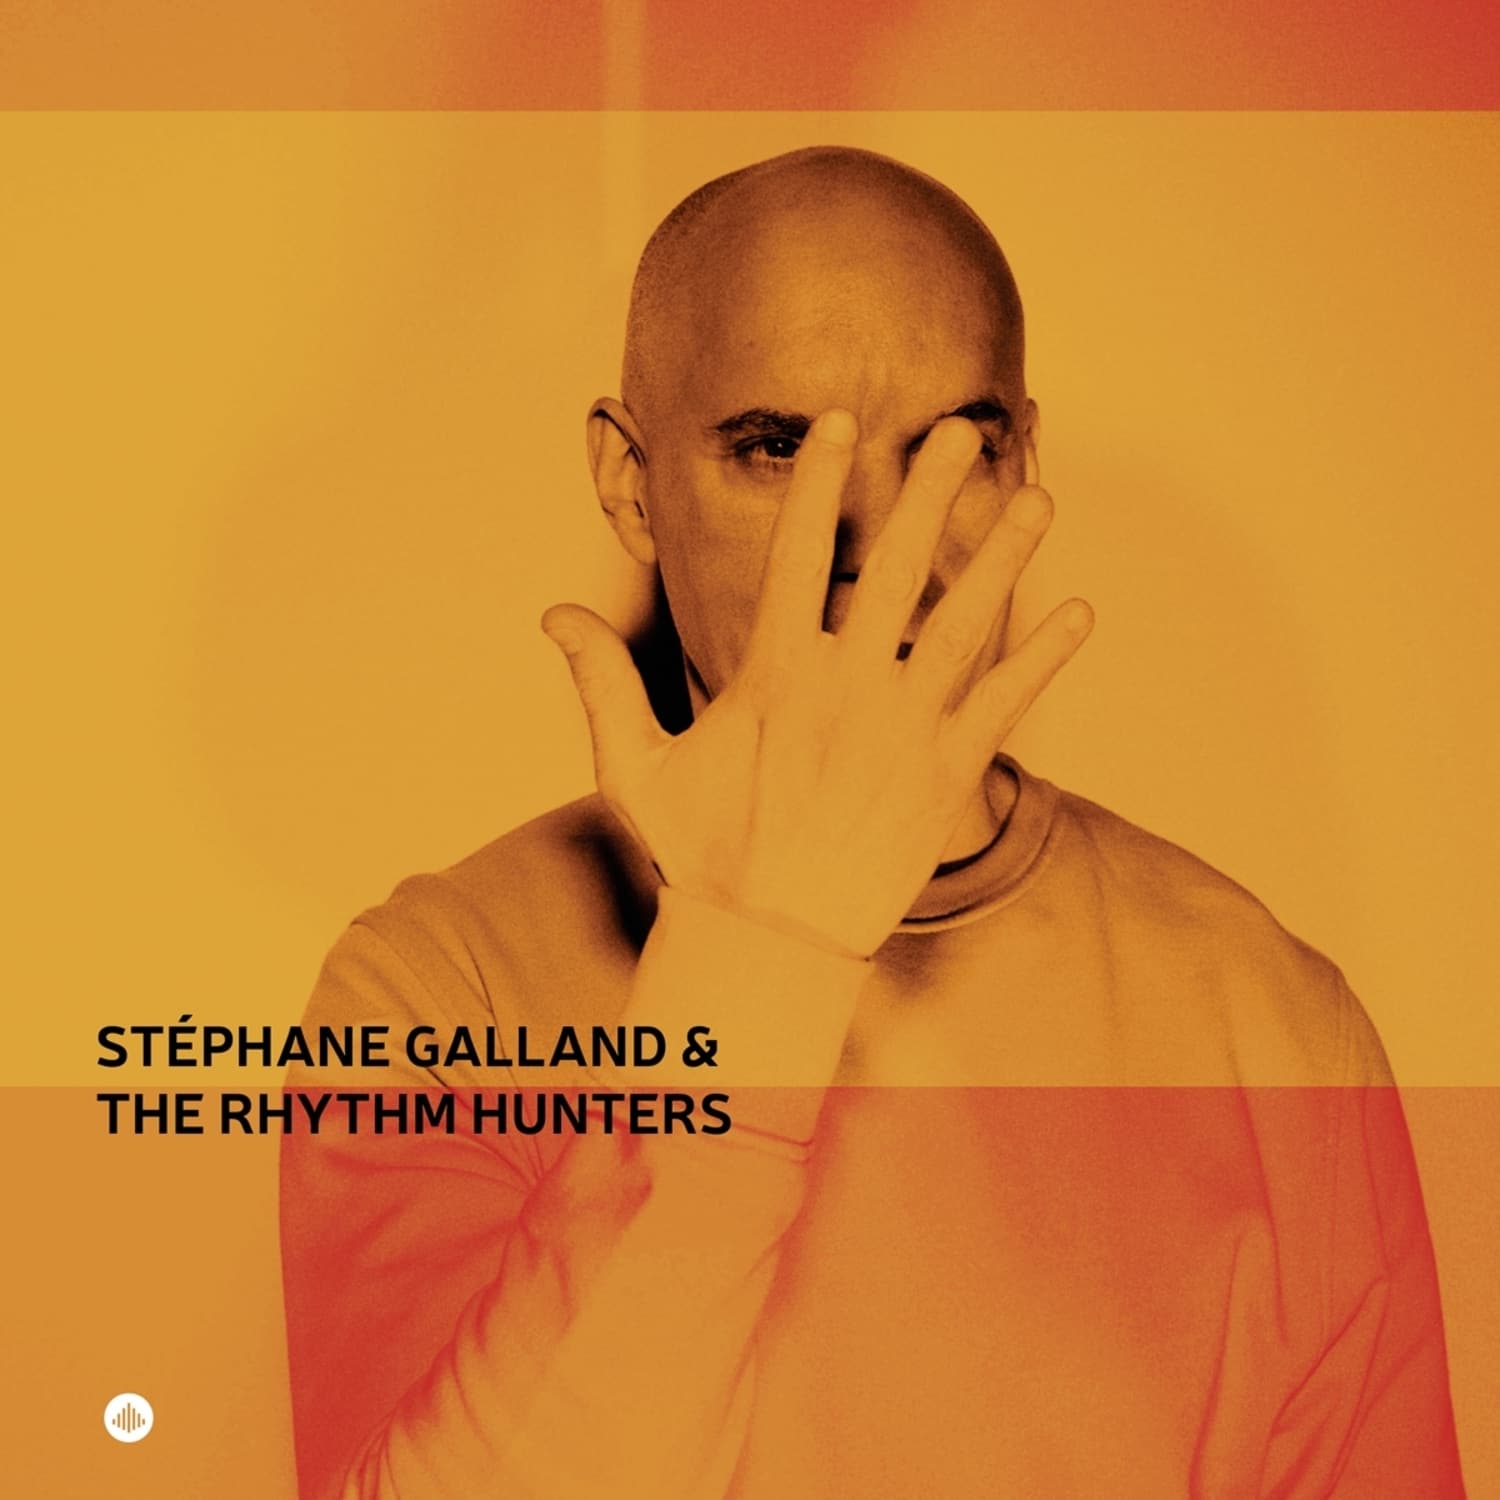 Stephane Galland & the Rhythm Hunters - STEPHANE GALLAND & THE RHYTHM HUNTERS 